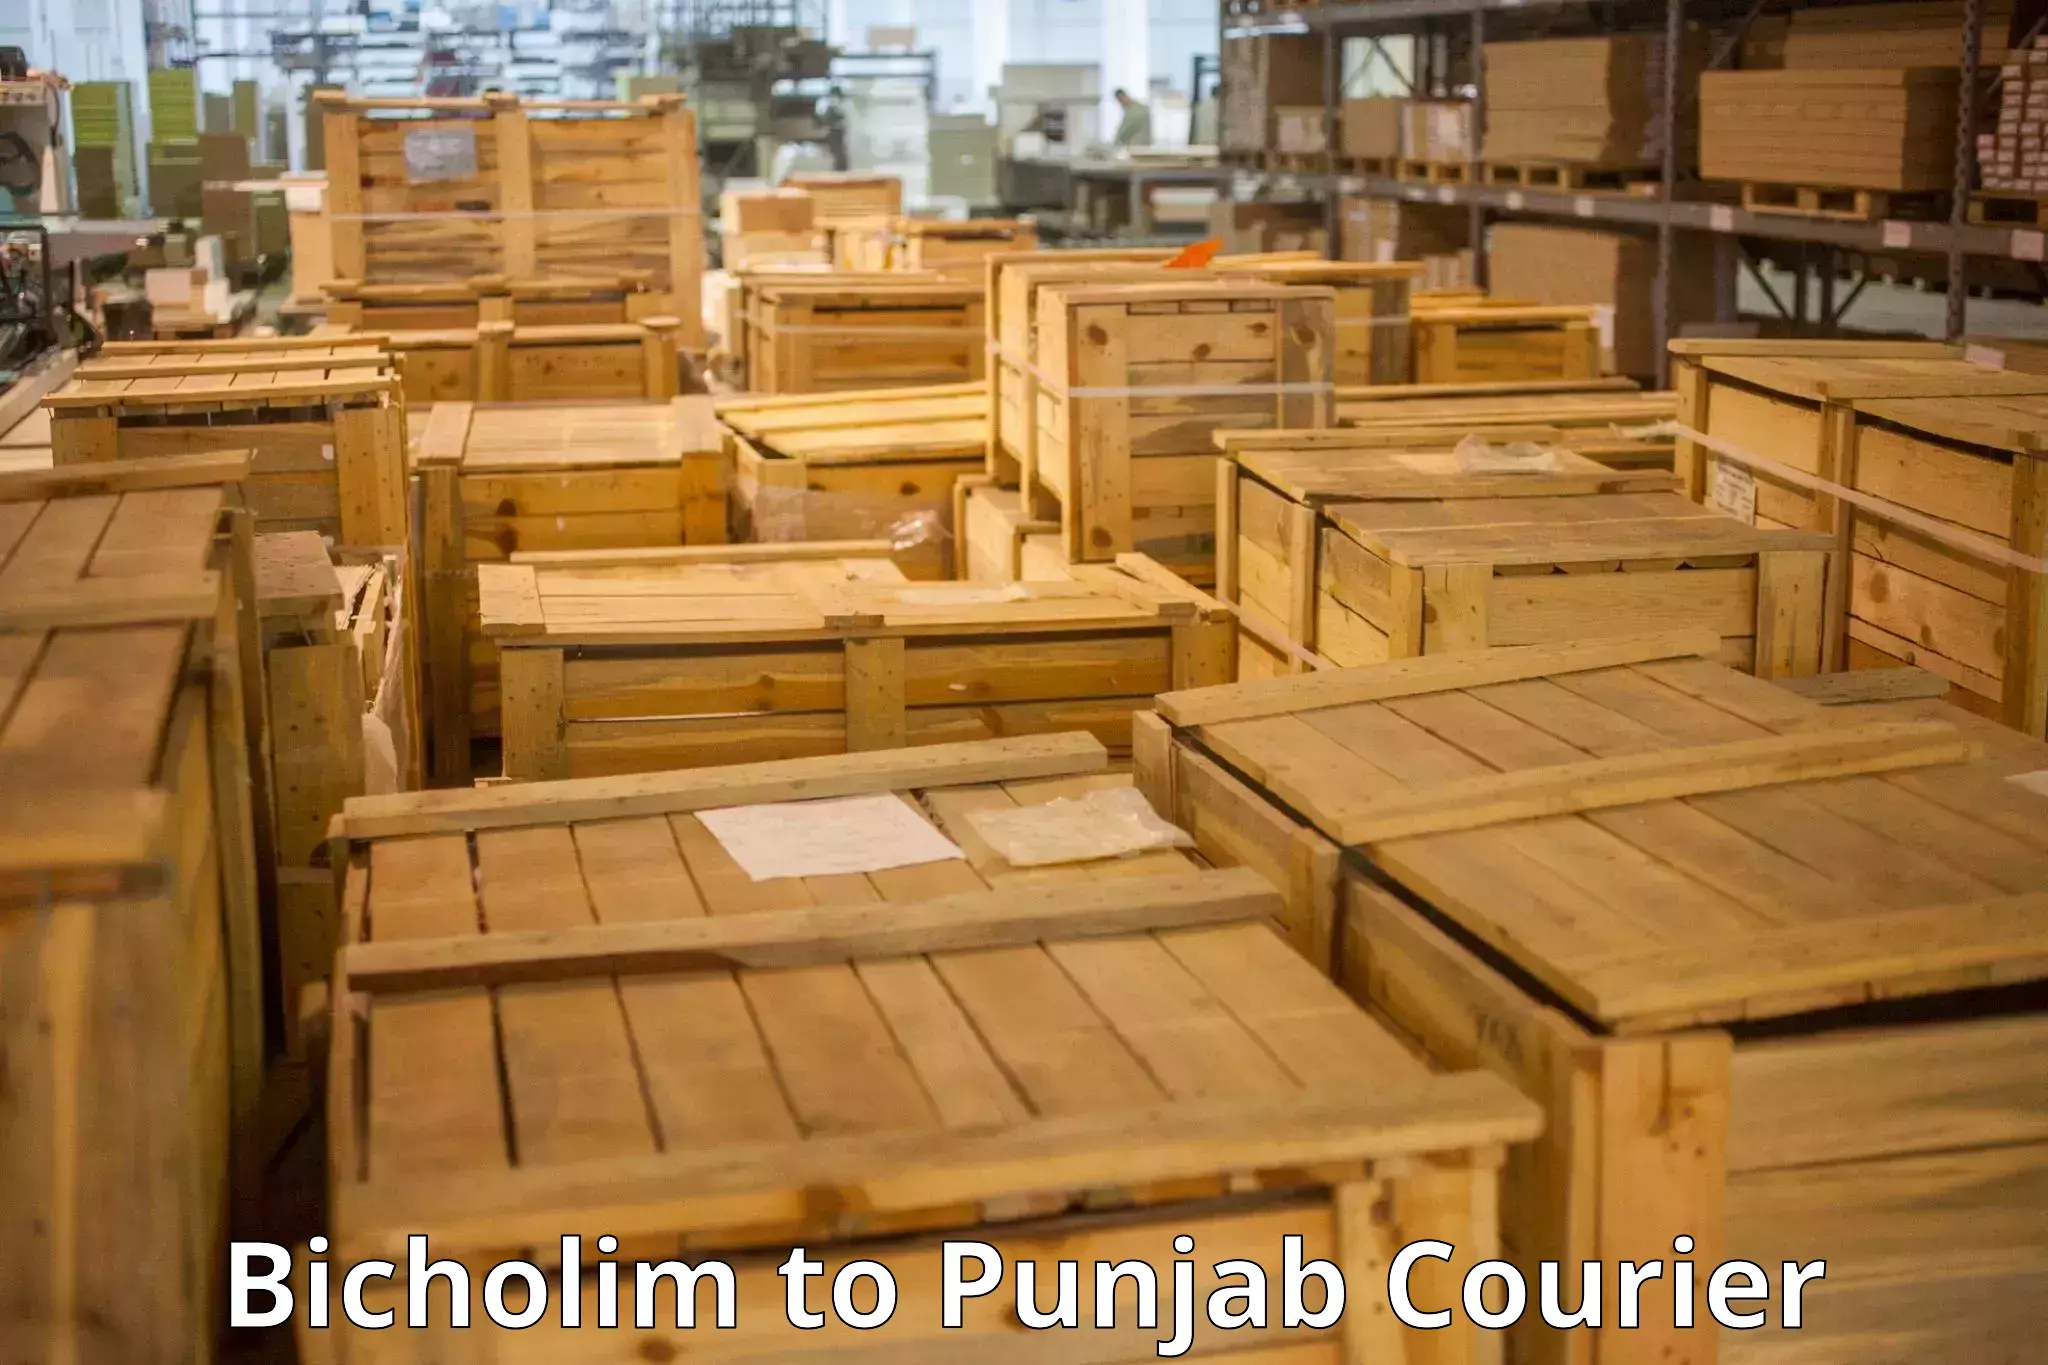 Luggage transport company Bicholim to Punjab